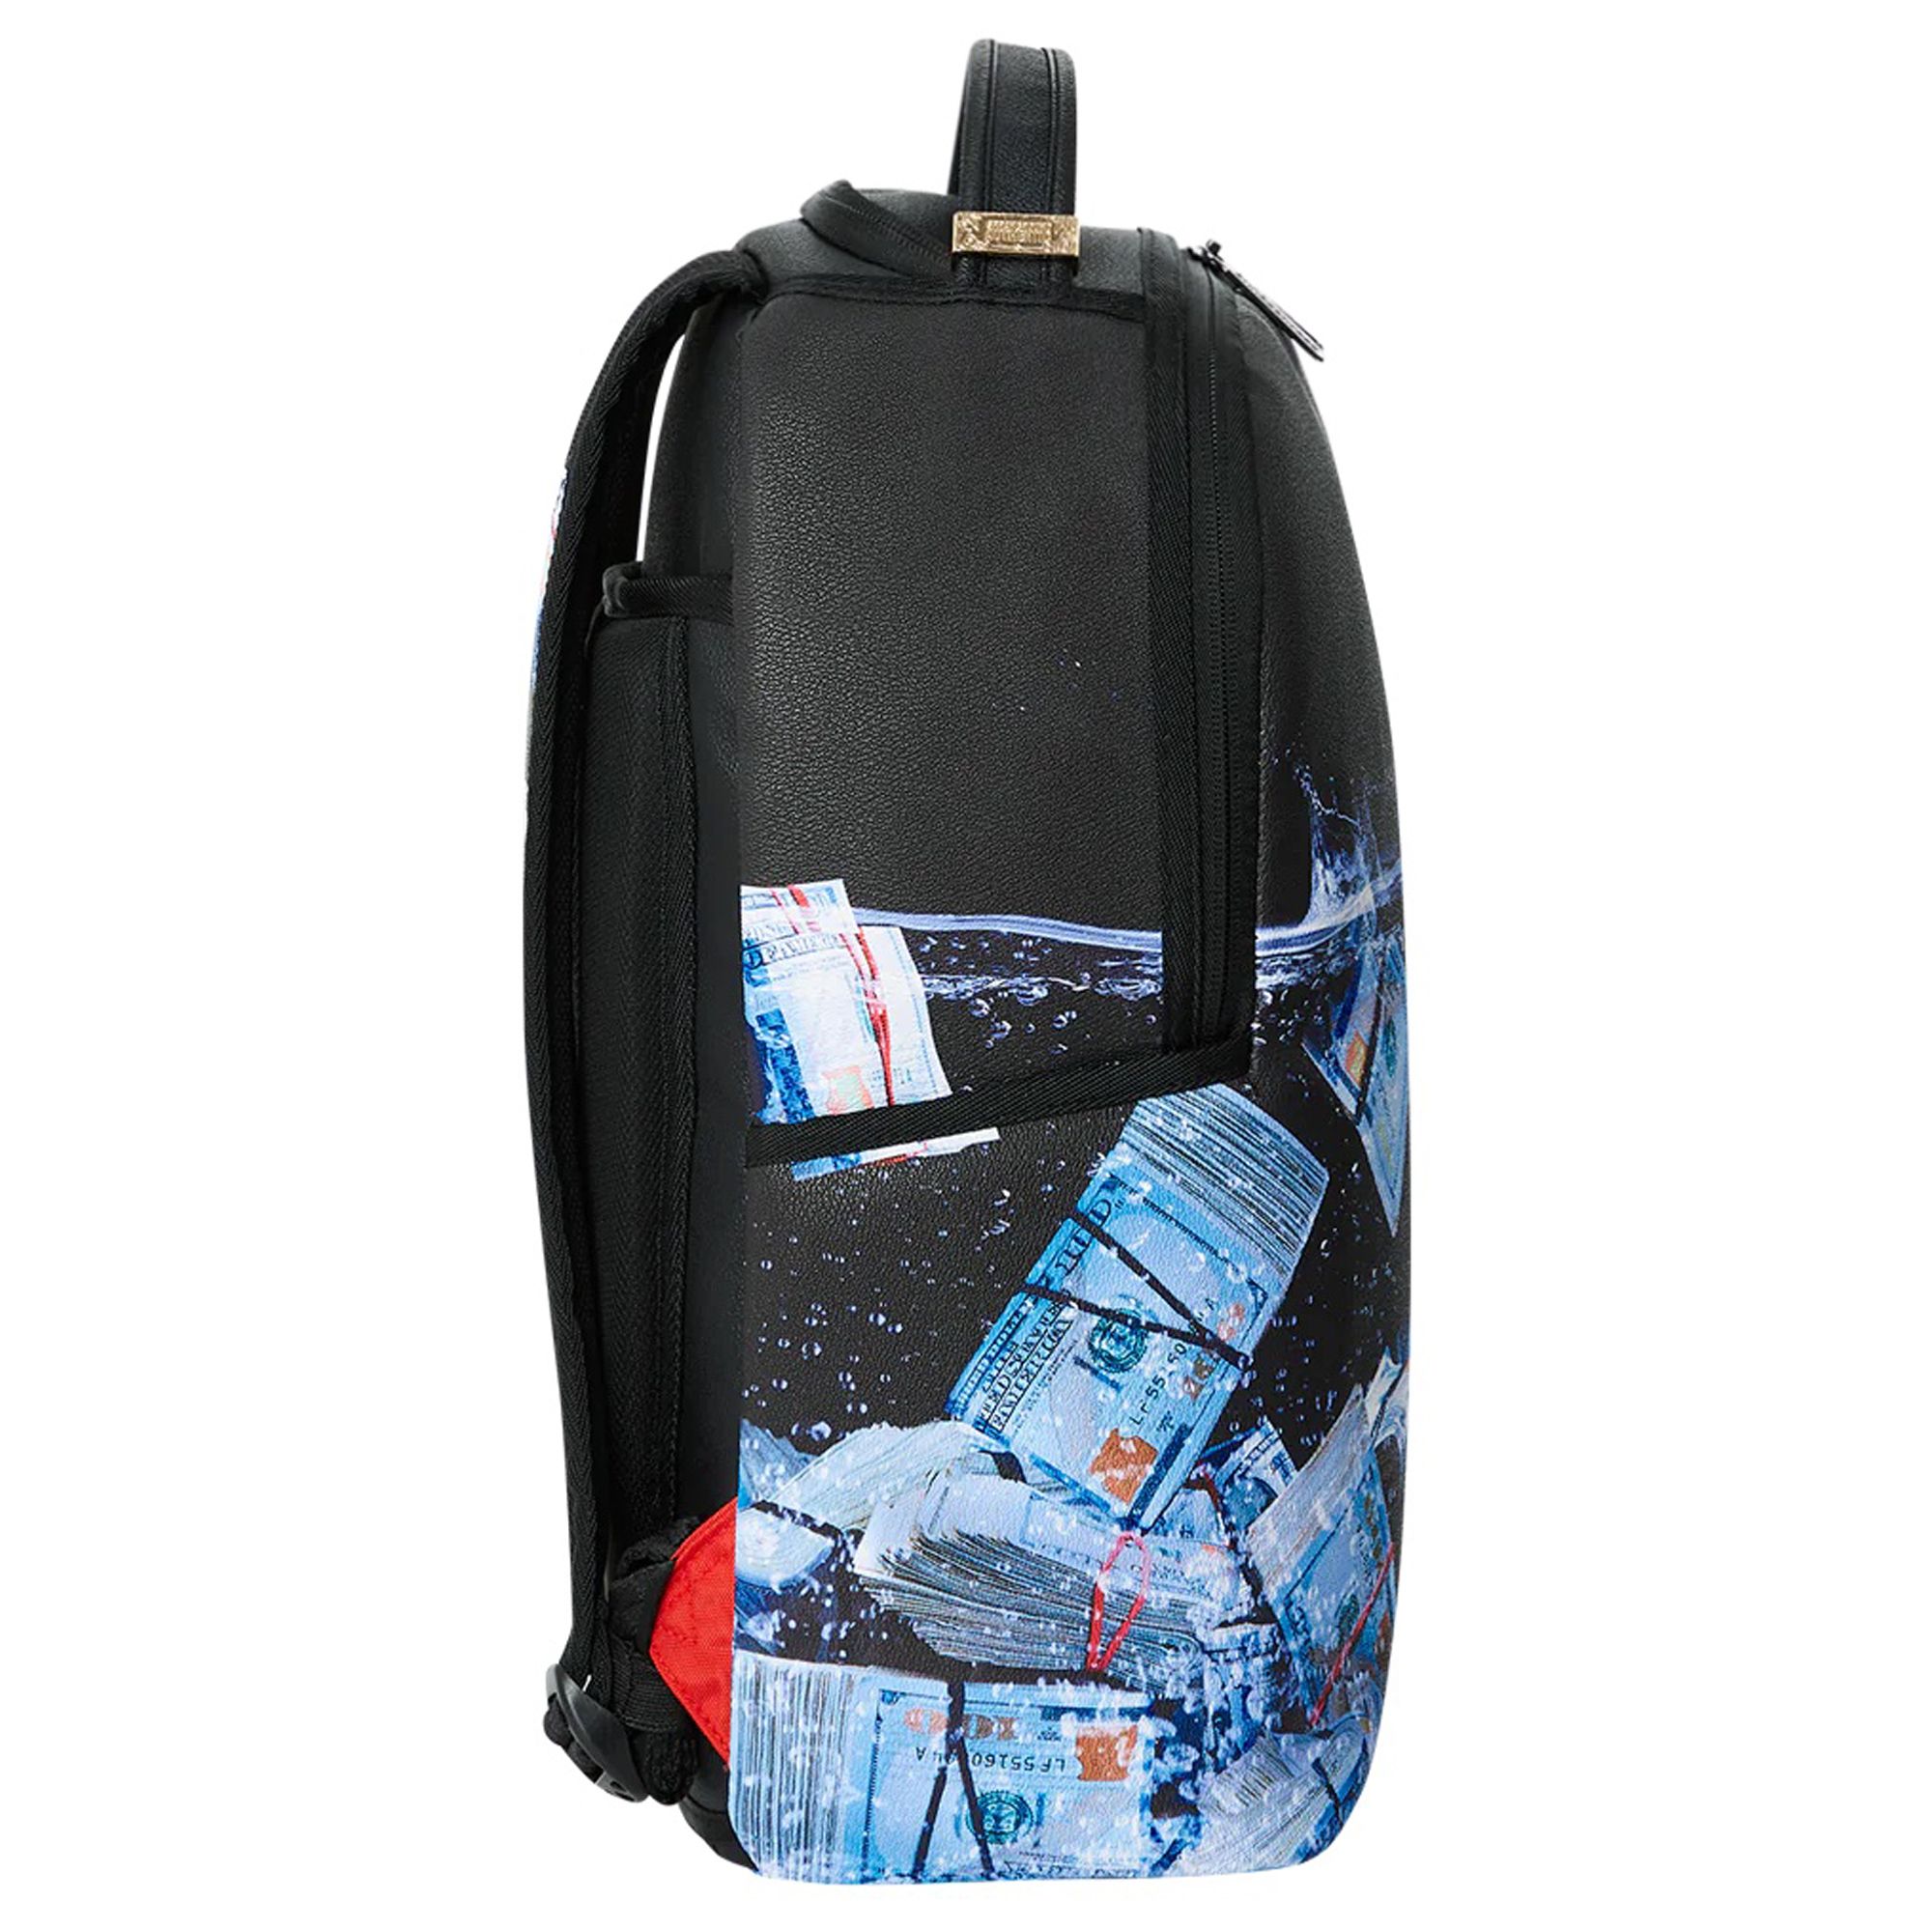 Unbxng - Sprayground money shark backpack